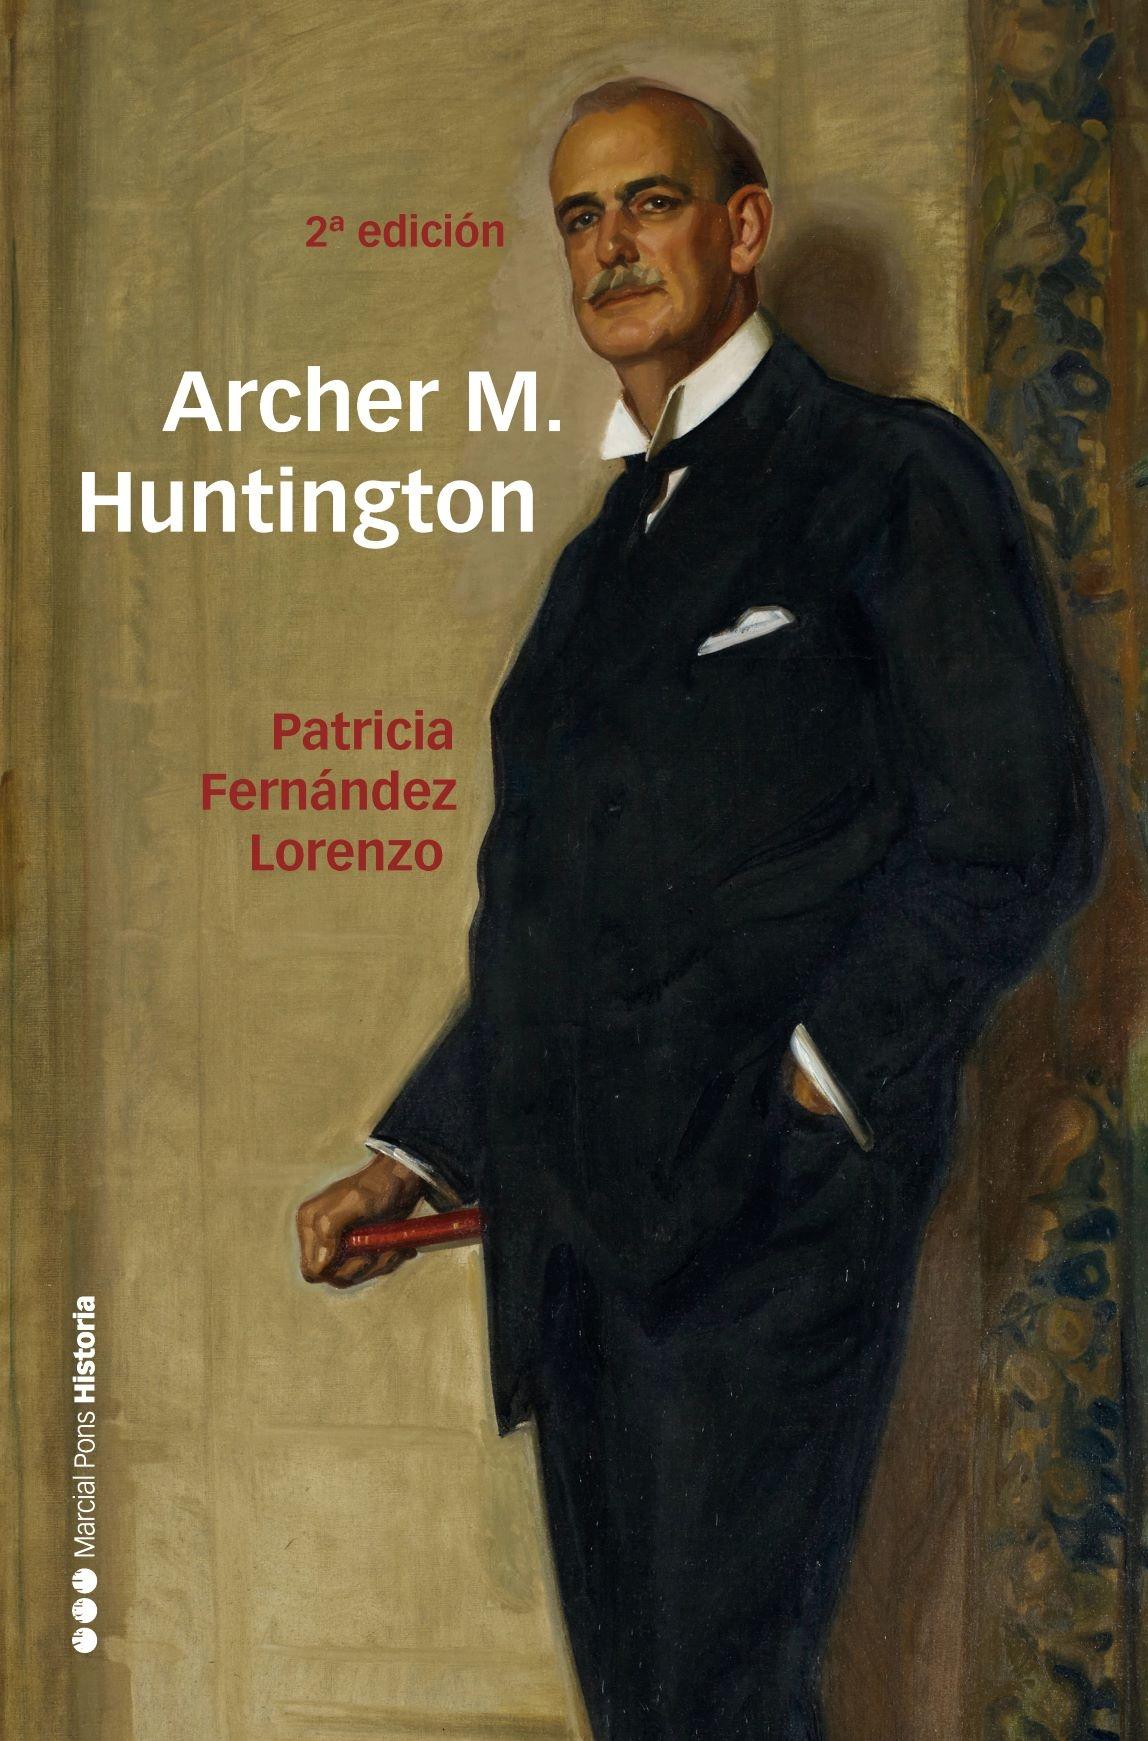 Archer M. Huntington "El Fundador de la Hispanic Society Of America en España". 